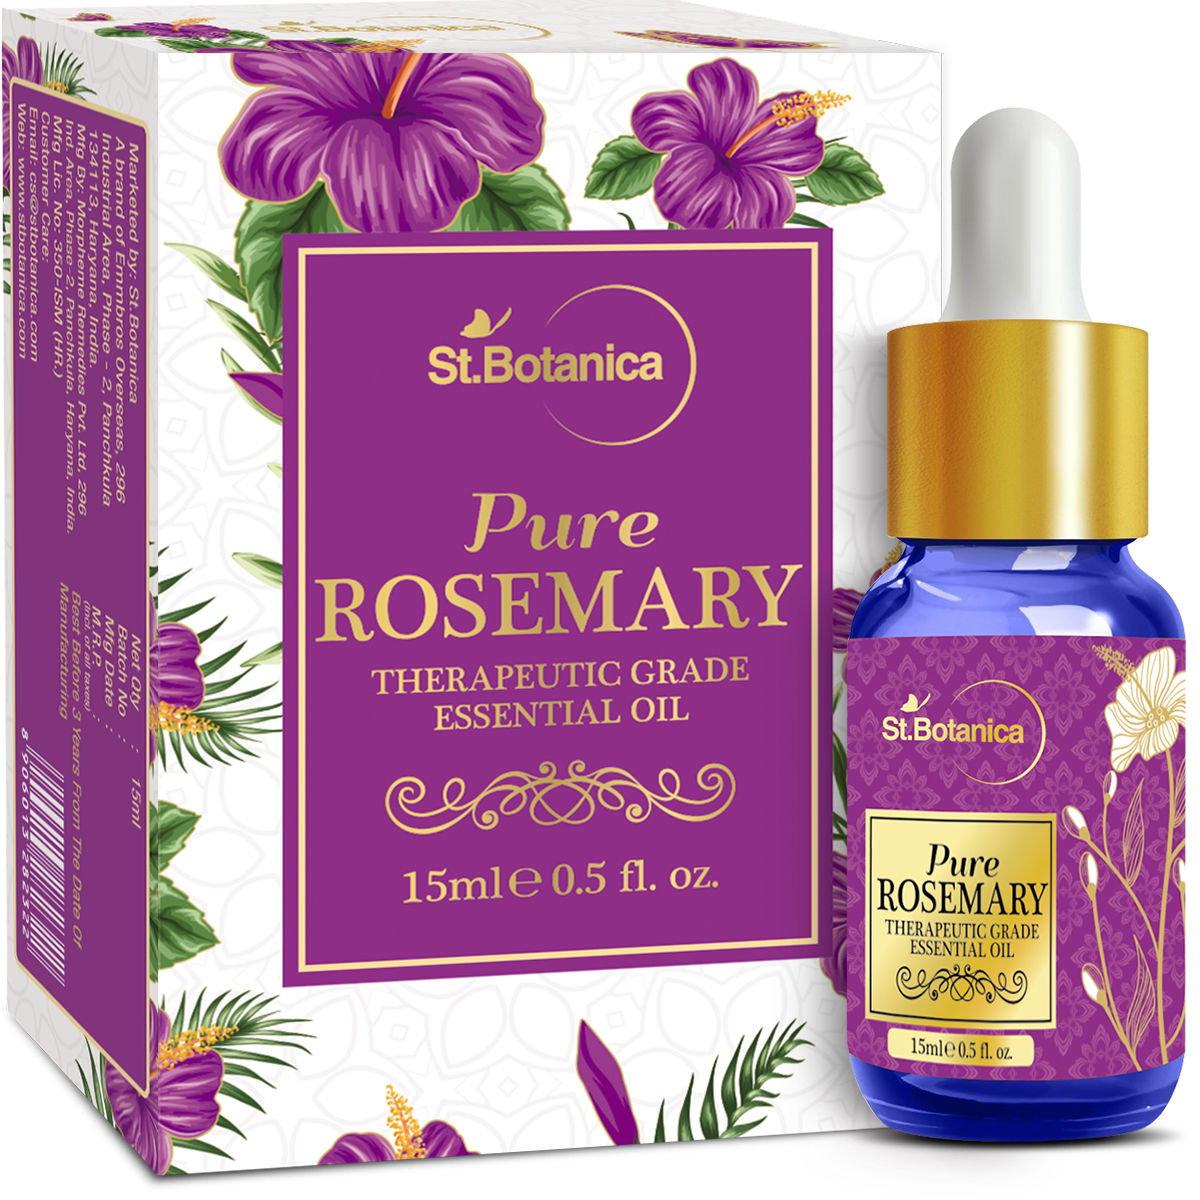 Buy St.Botanica Pure Rosemary Therapeutic Grade Essential Oil (15 ml) - Purplle